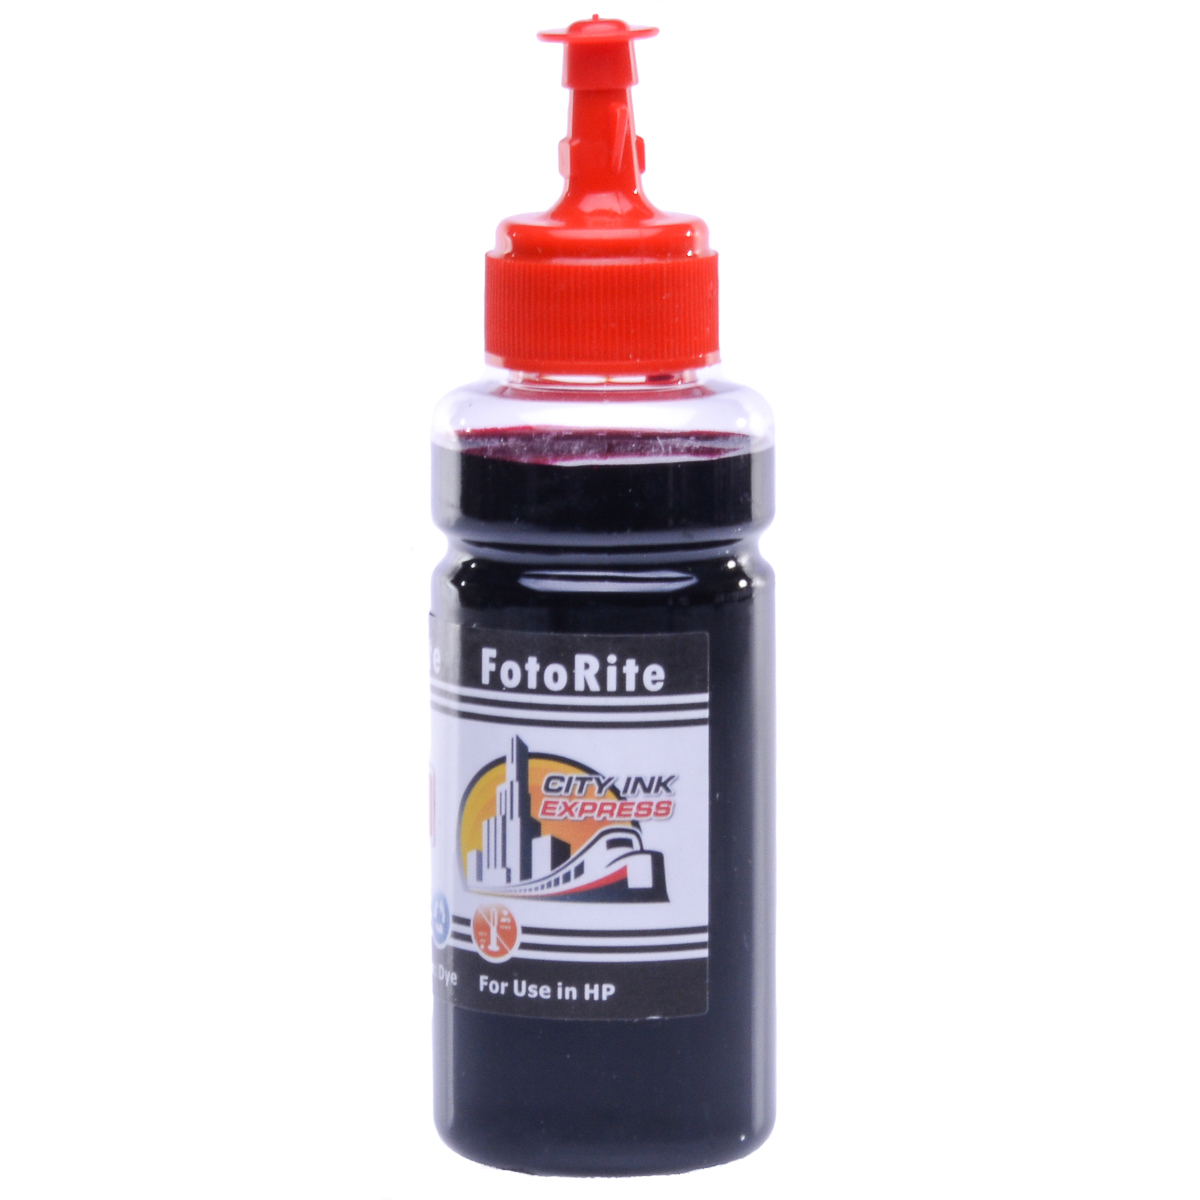 Cheap Magenta dye ink replaces HP Photosmart C309g - HP 364